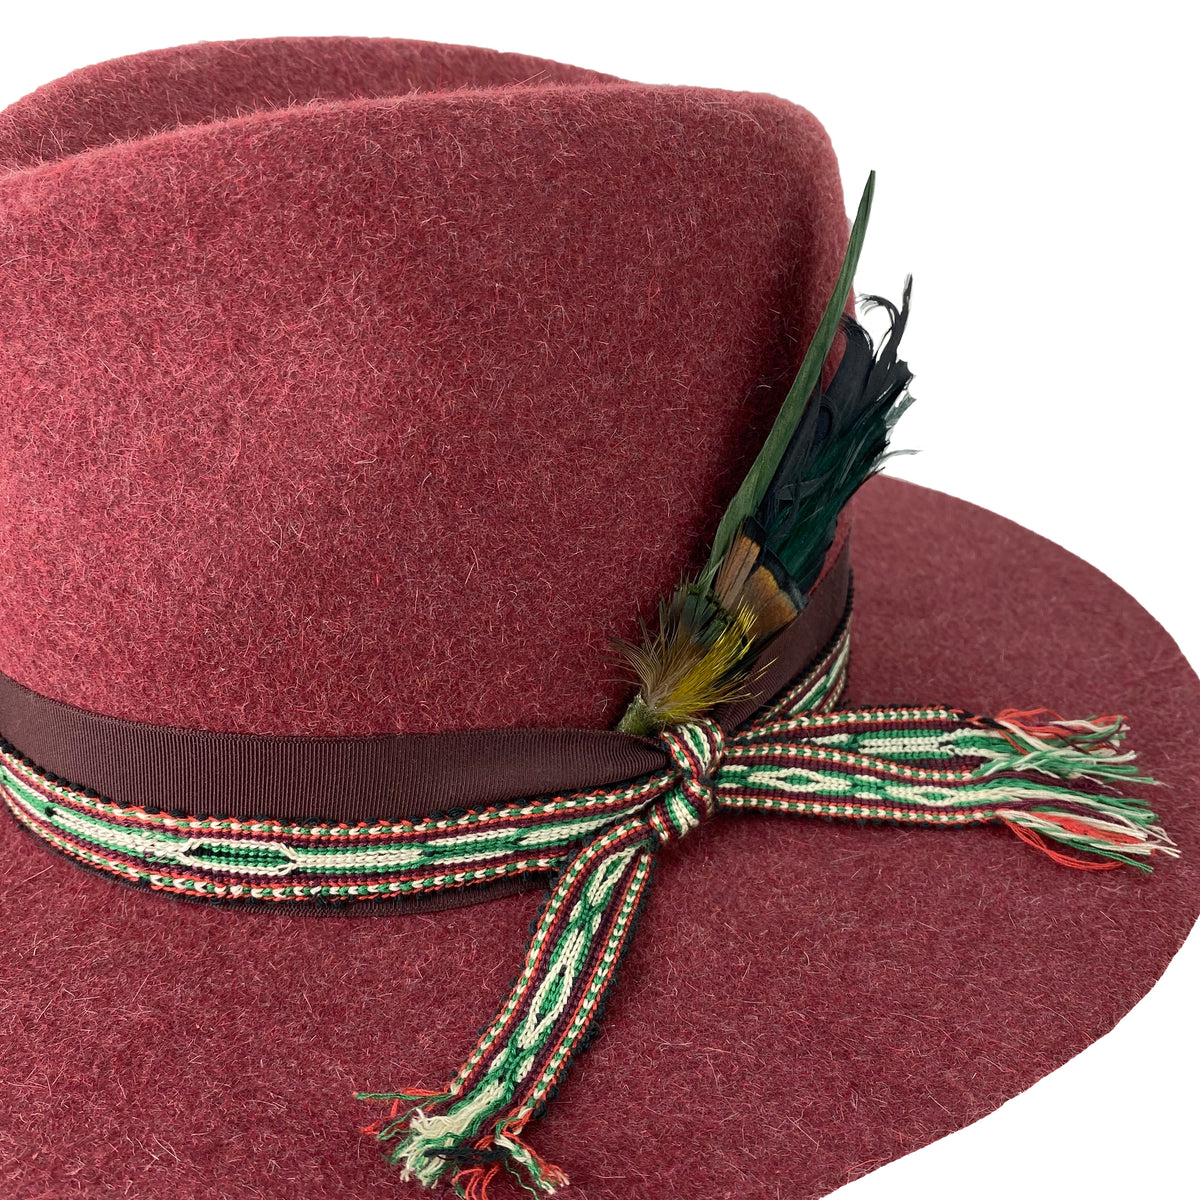 hatWRKS original with grosgrain ribbon hatband with uzbek woven trim & custom feather